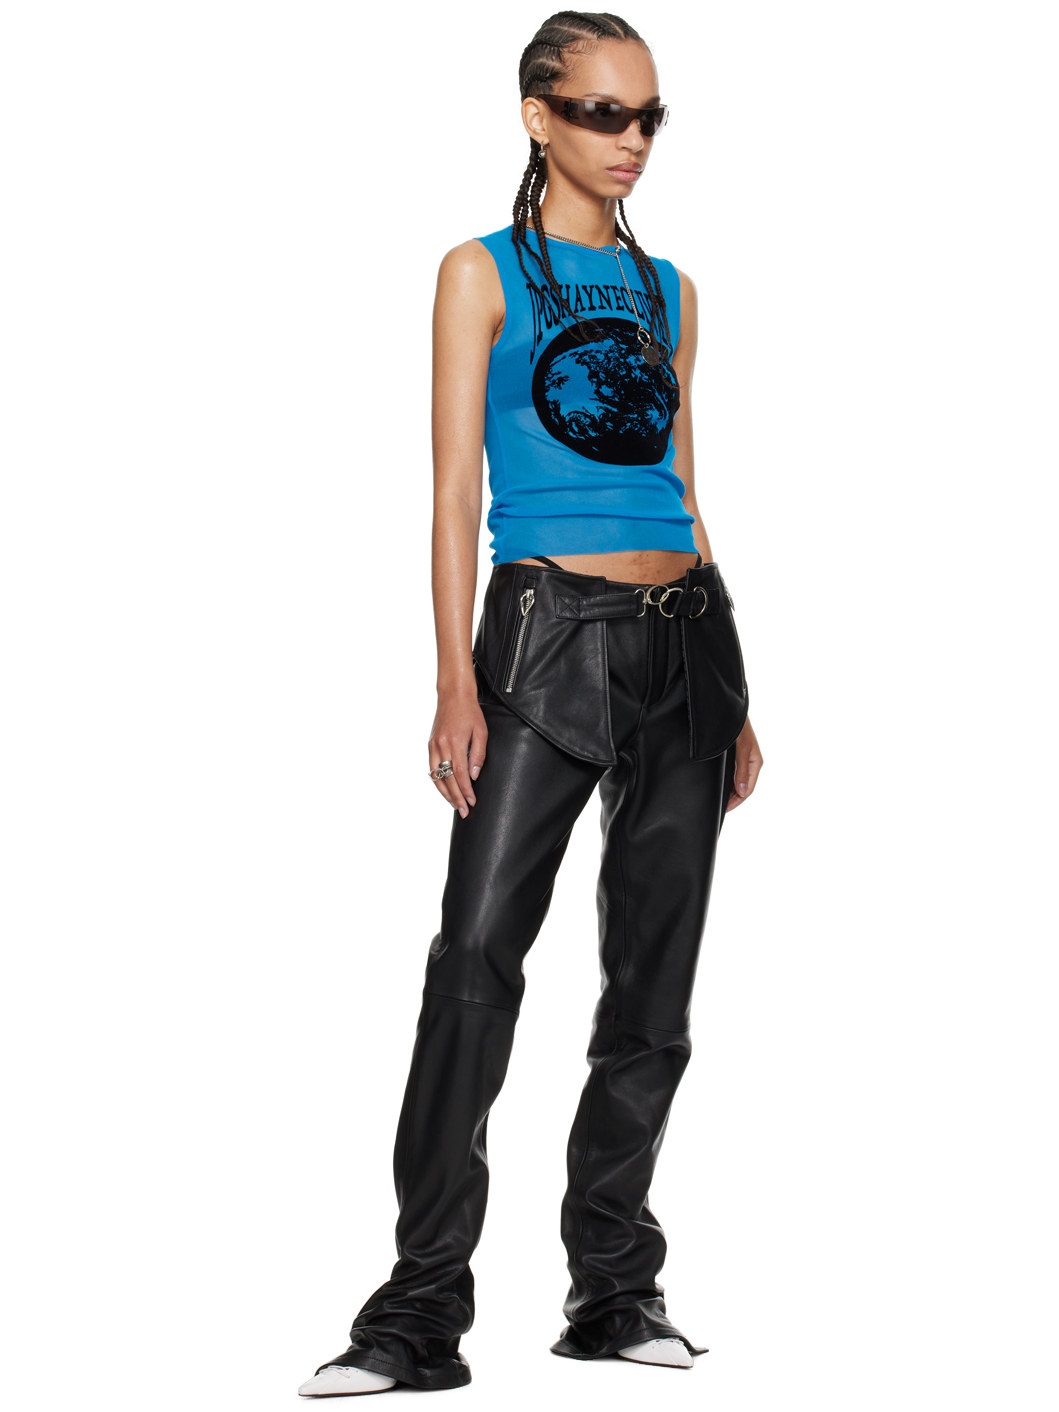 Black Shayne Oliver Edition Leather Pants - 5